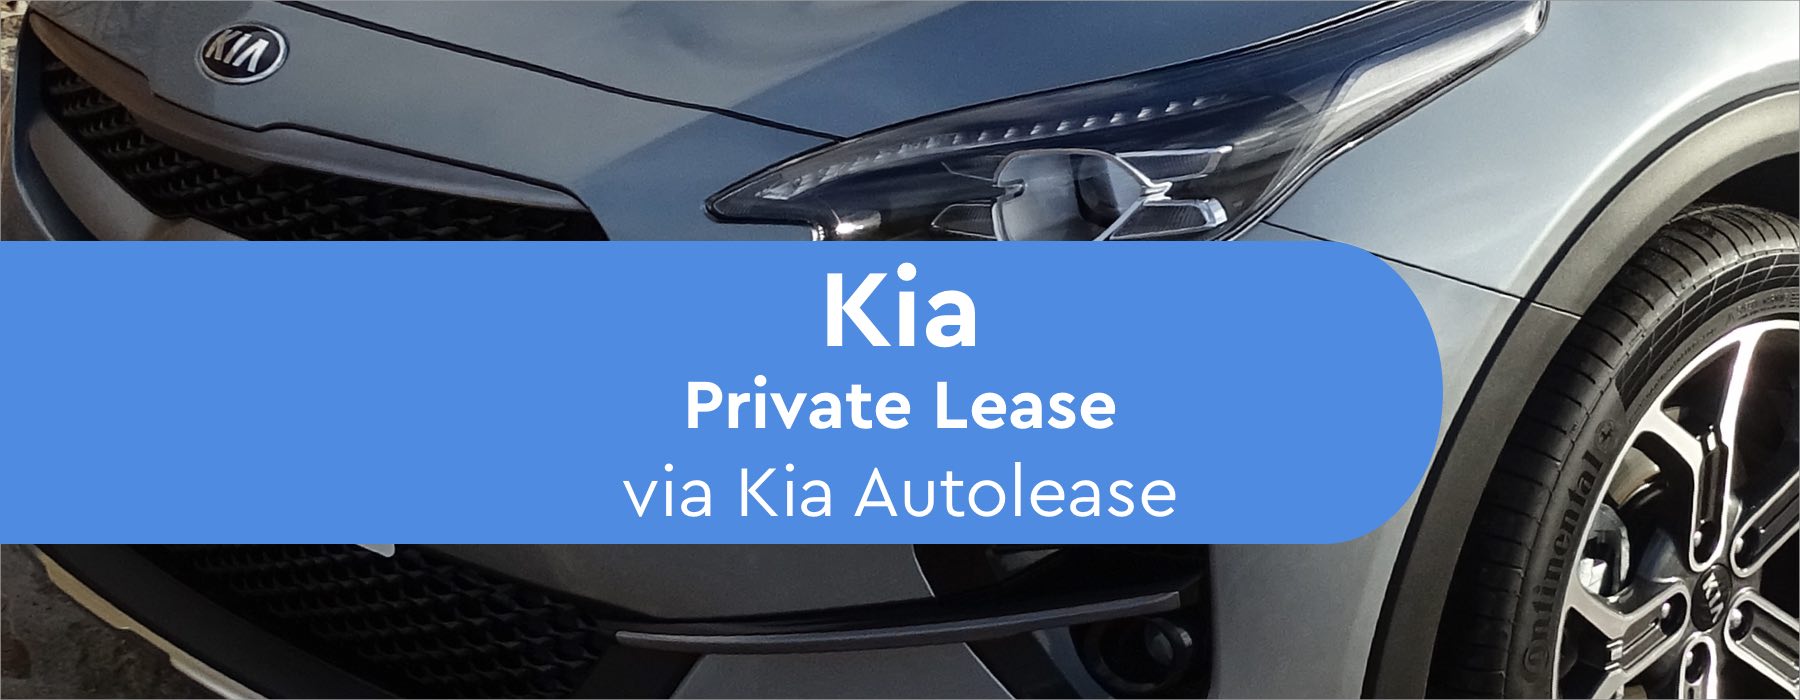 Kia Autolease Private Lease